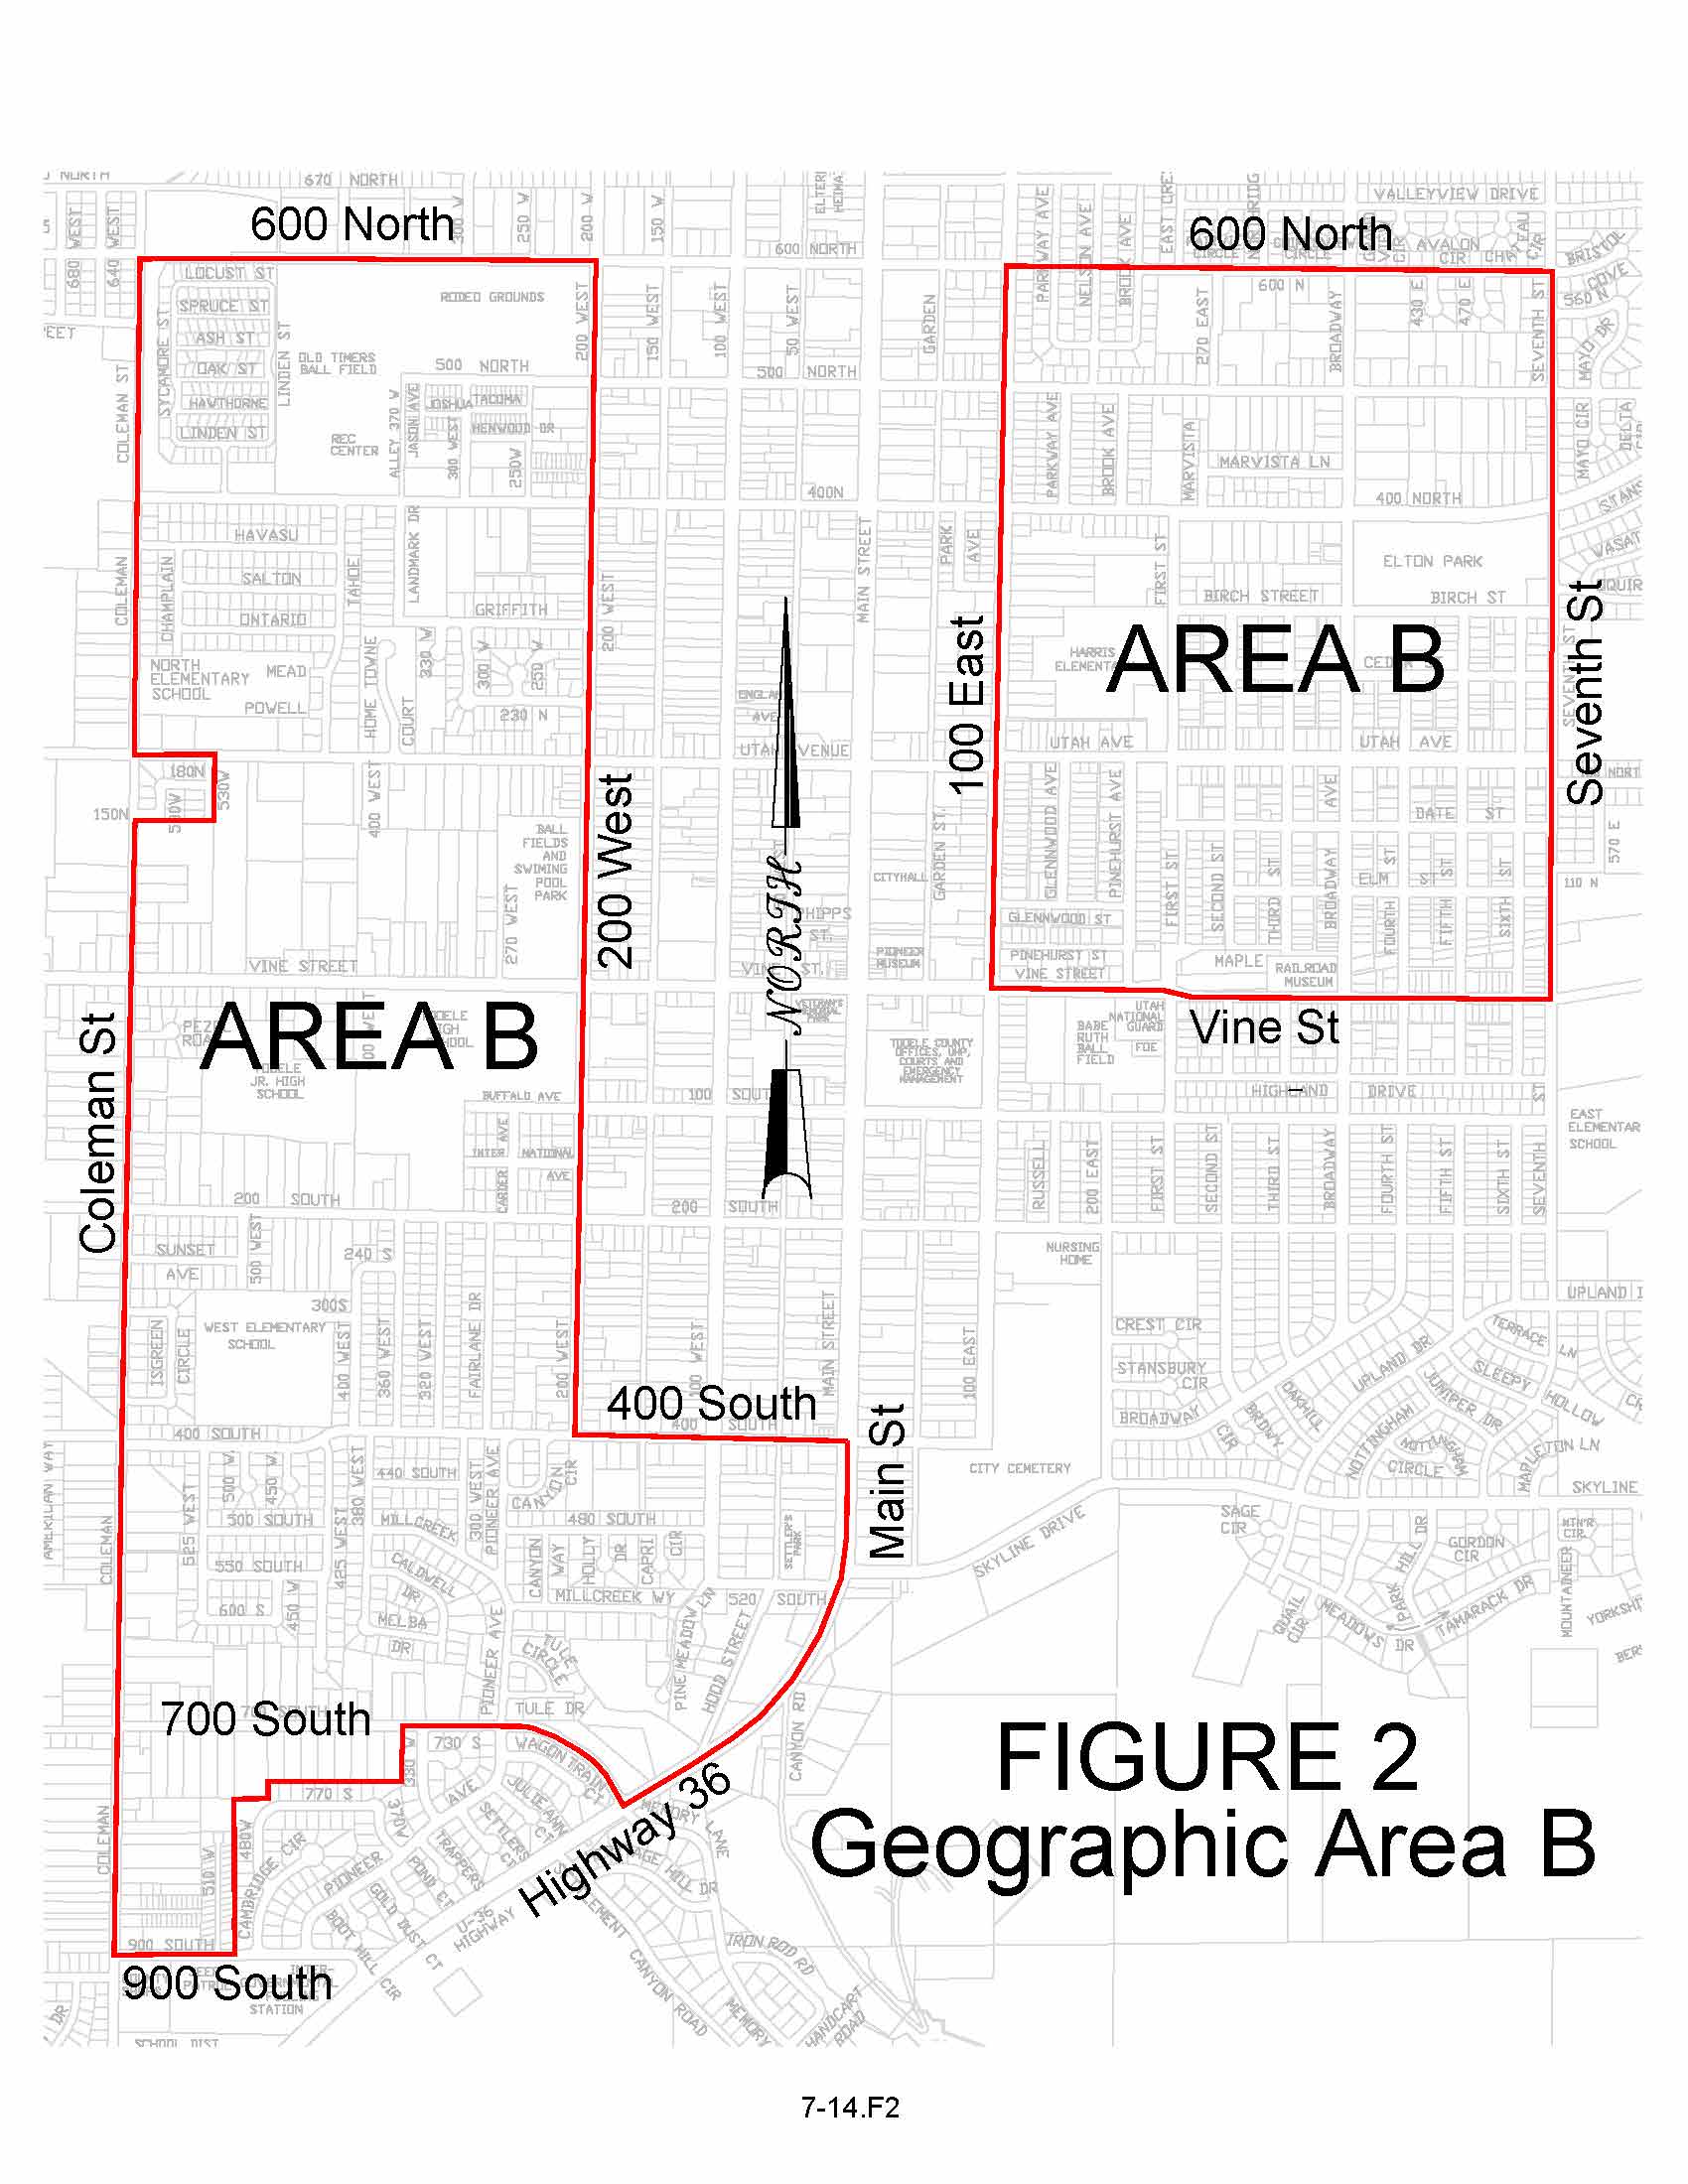 Geographic Area B Image